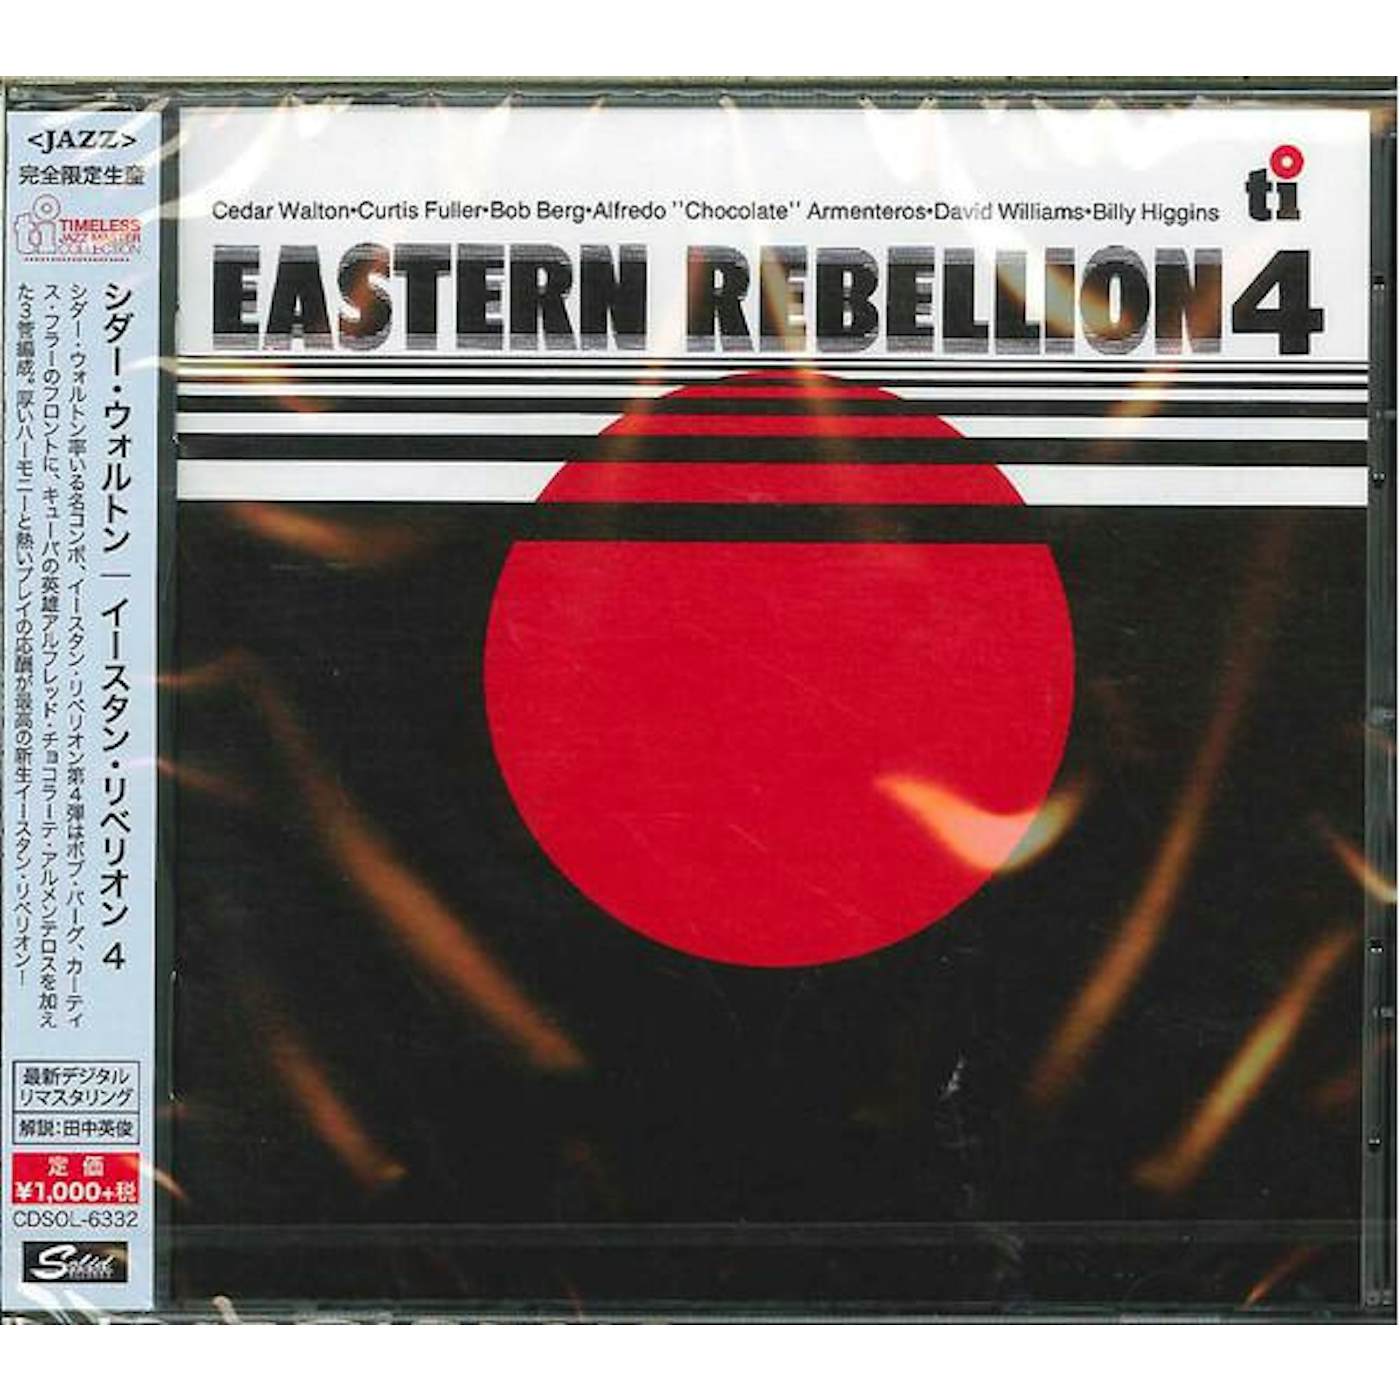 Cedar Walton EASTERN REBELLION 4 CD